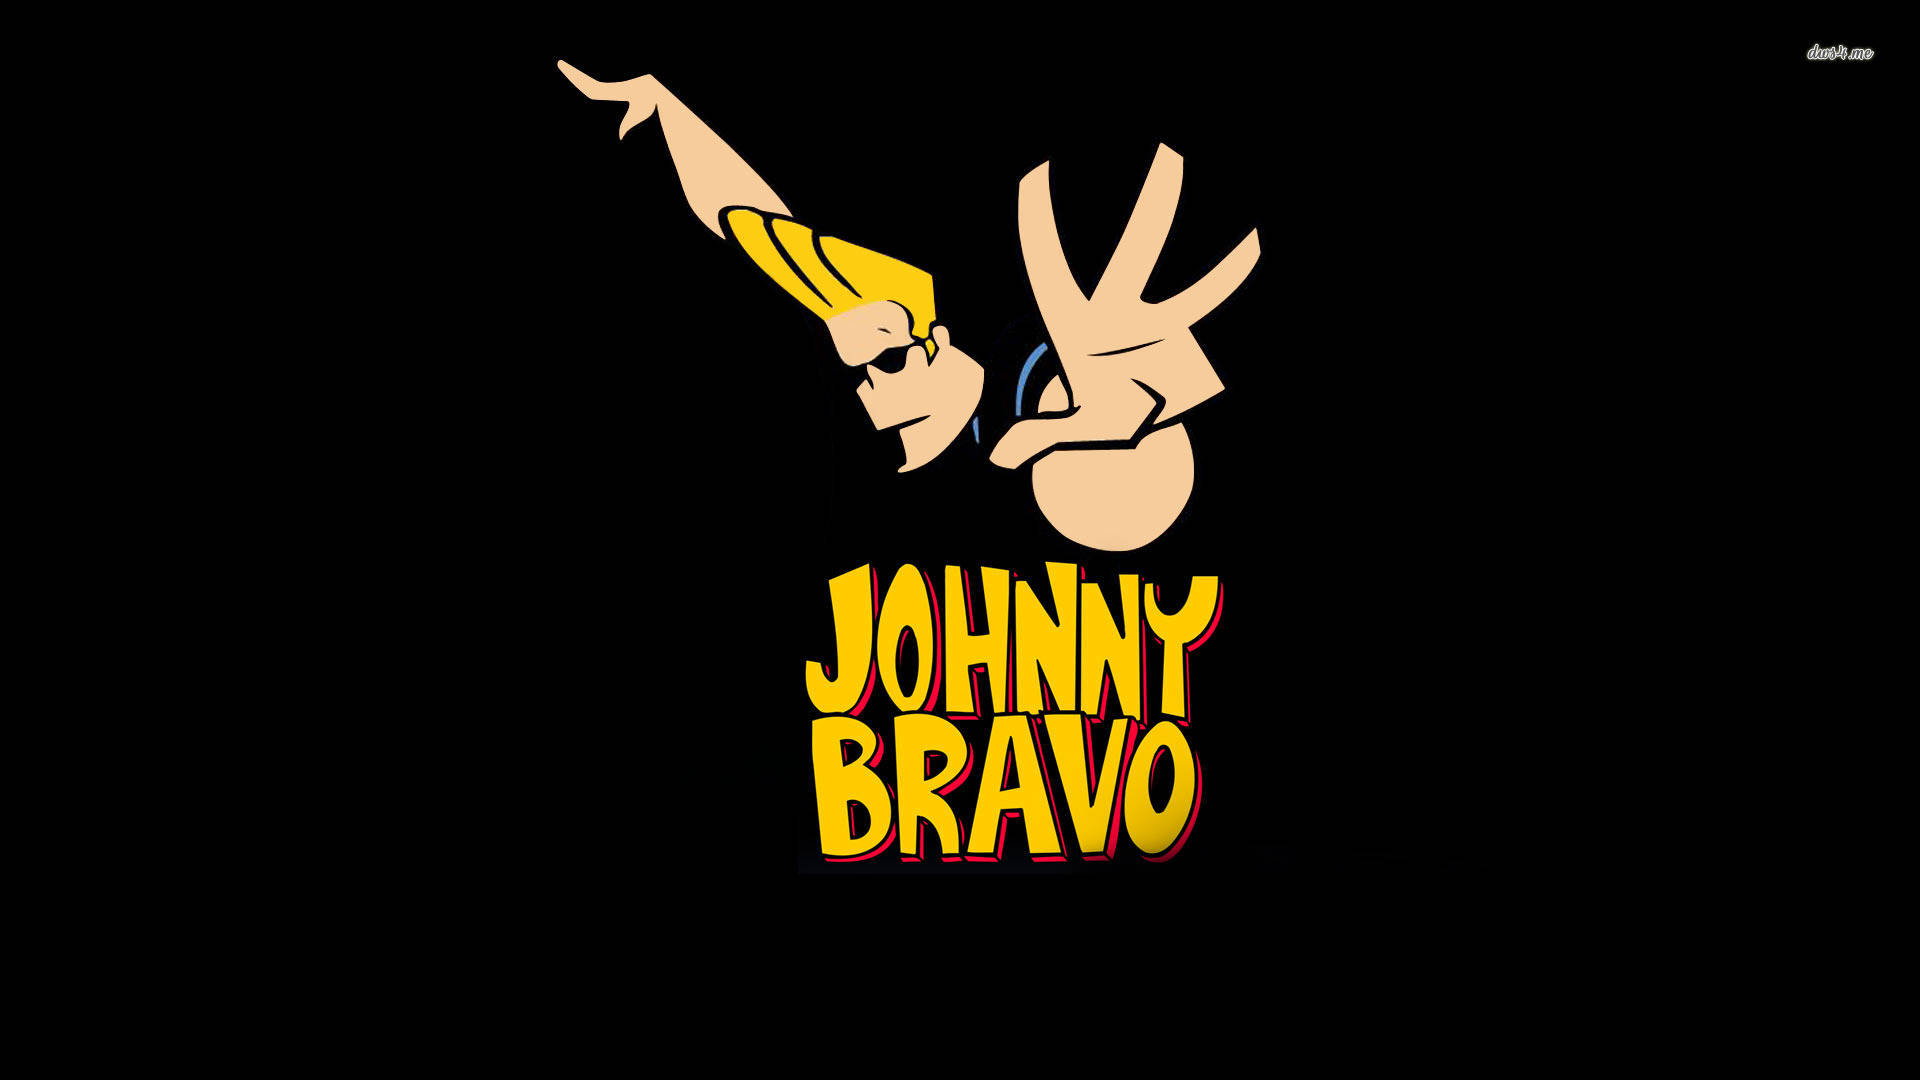 Johnny Bravo Background Wallpaper